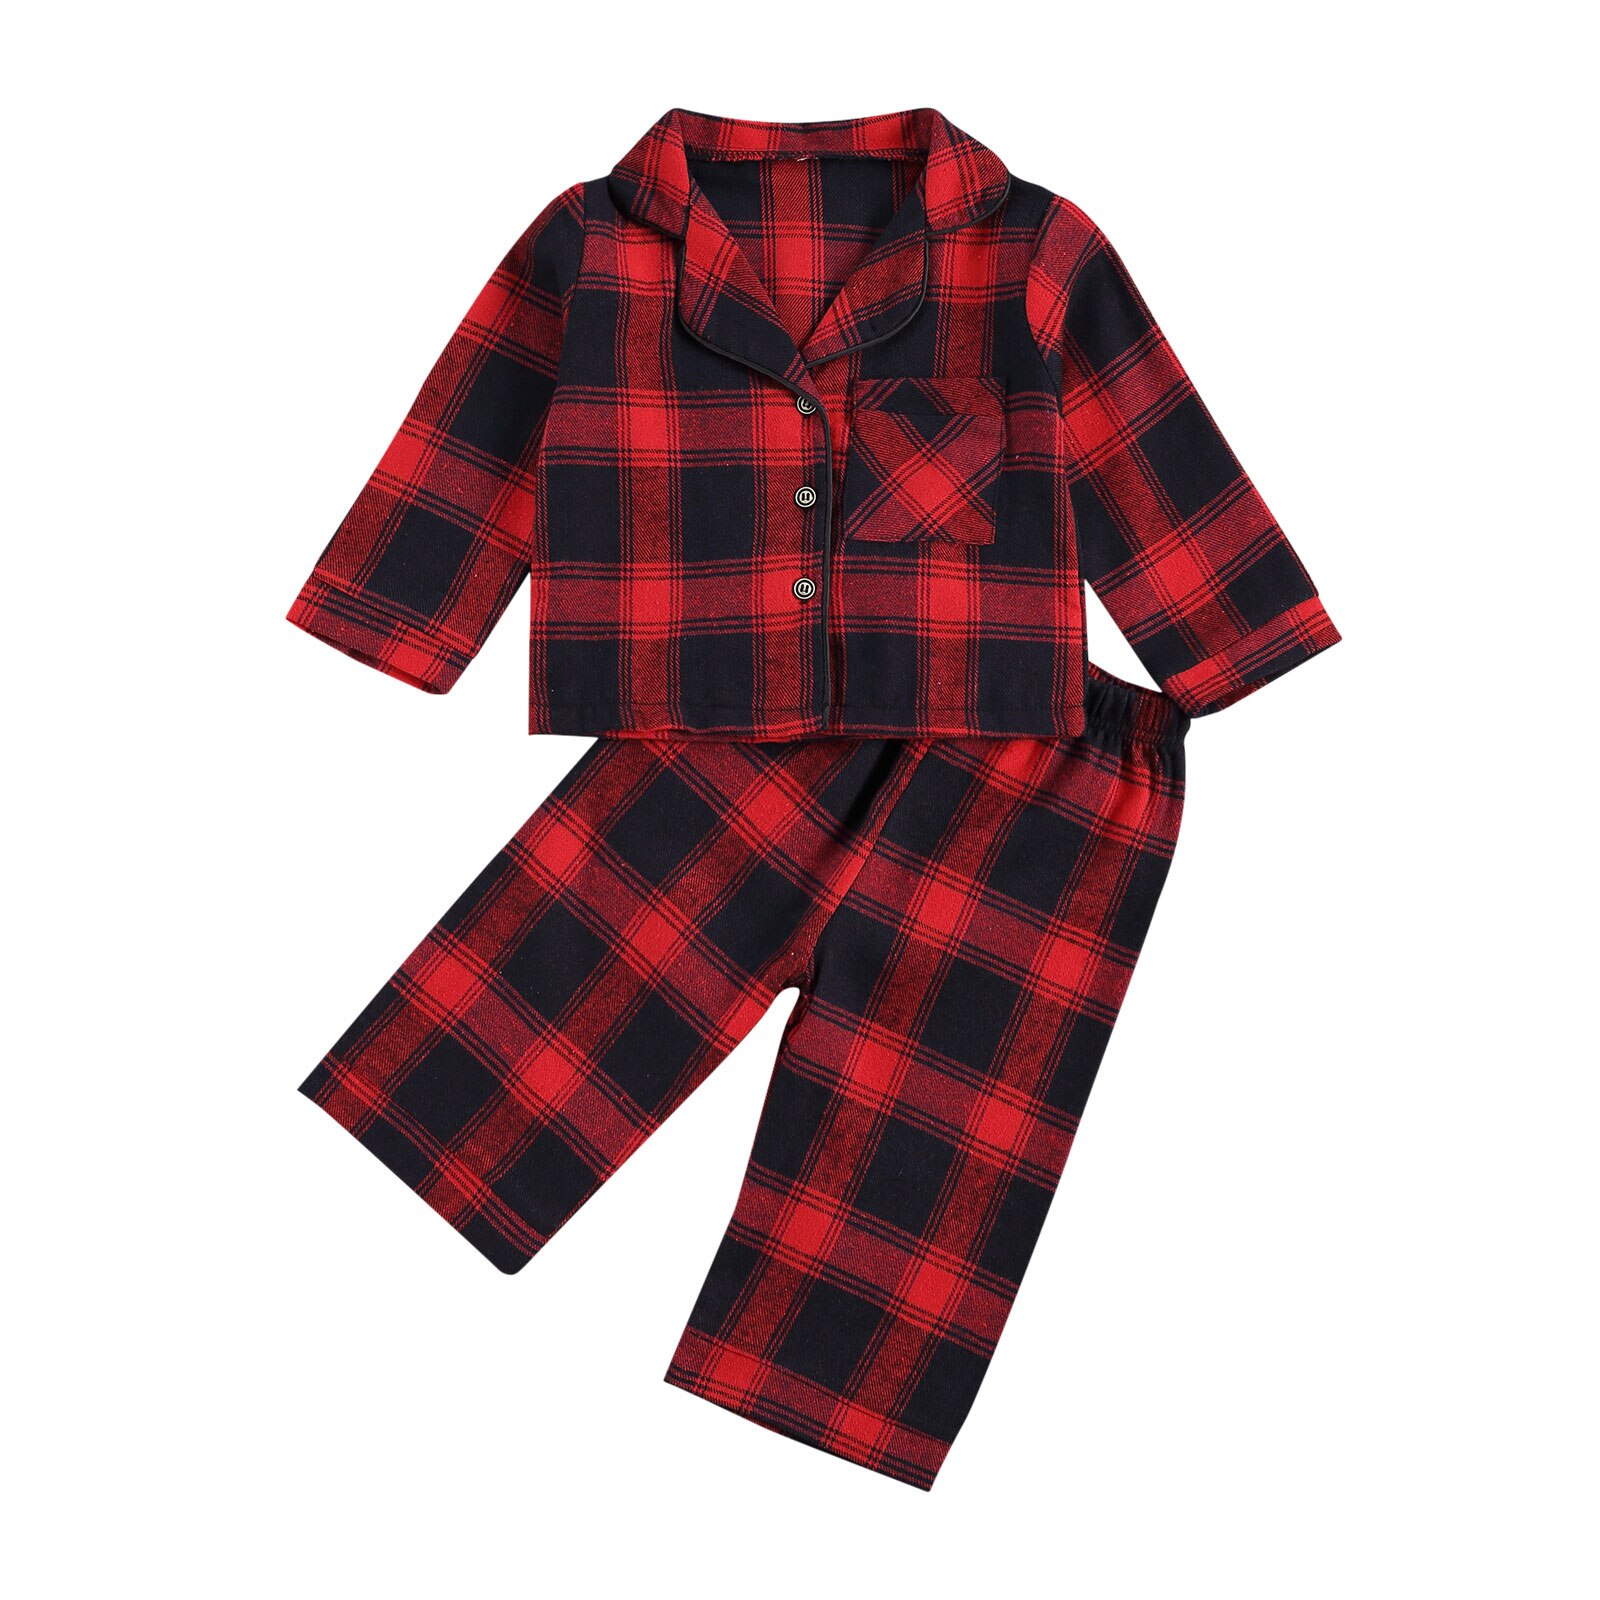 Ma & baby 1-7y jul toddler kid drenge pyjamas sæt rød plaid langærmet nattøj efterår xmas outfits børn kostumer